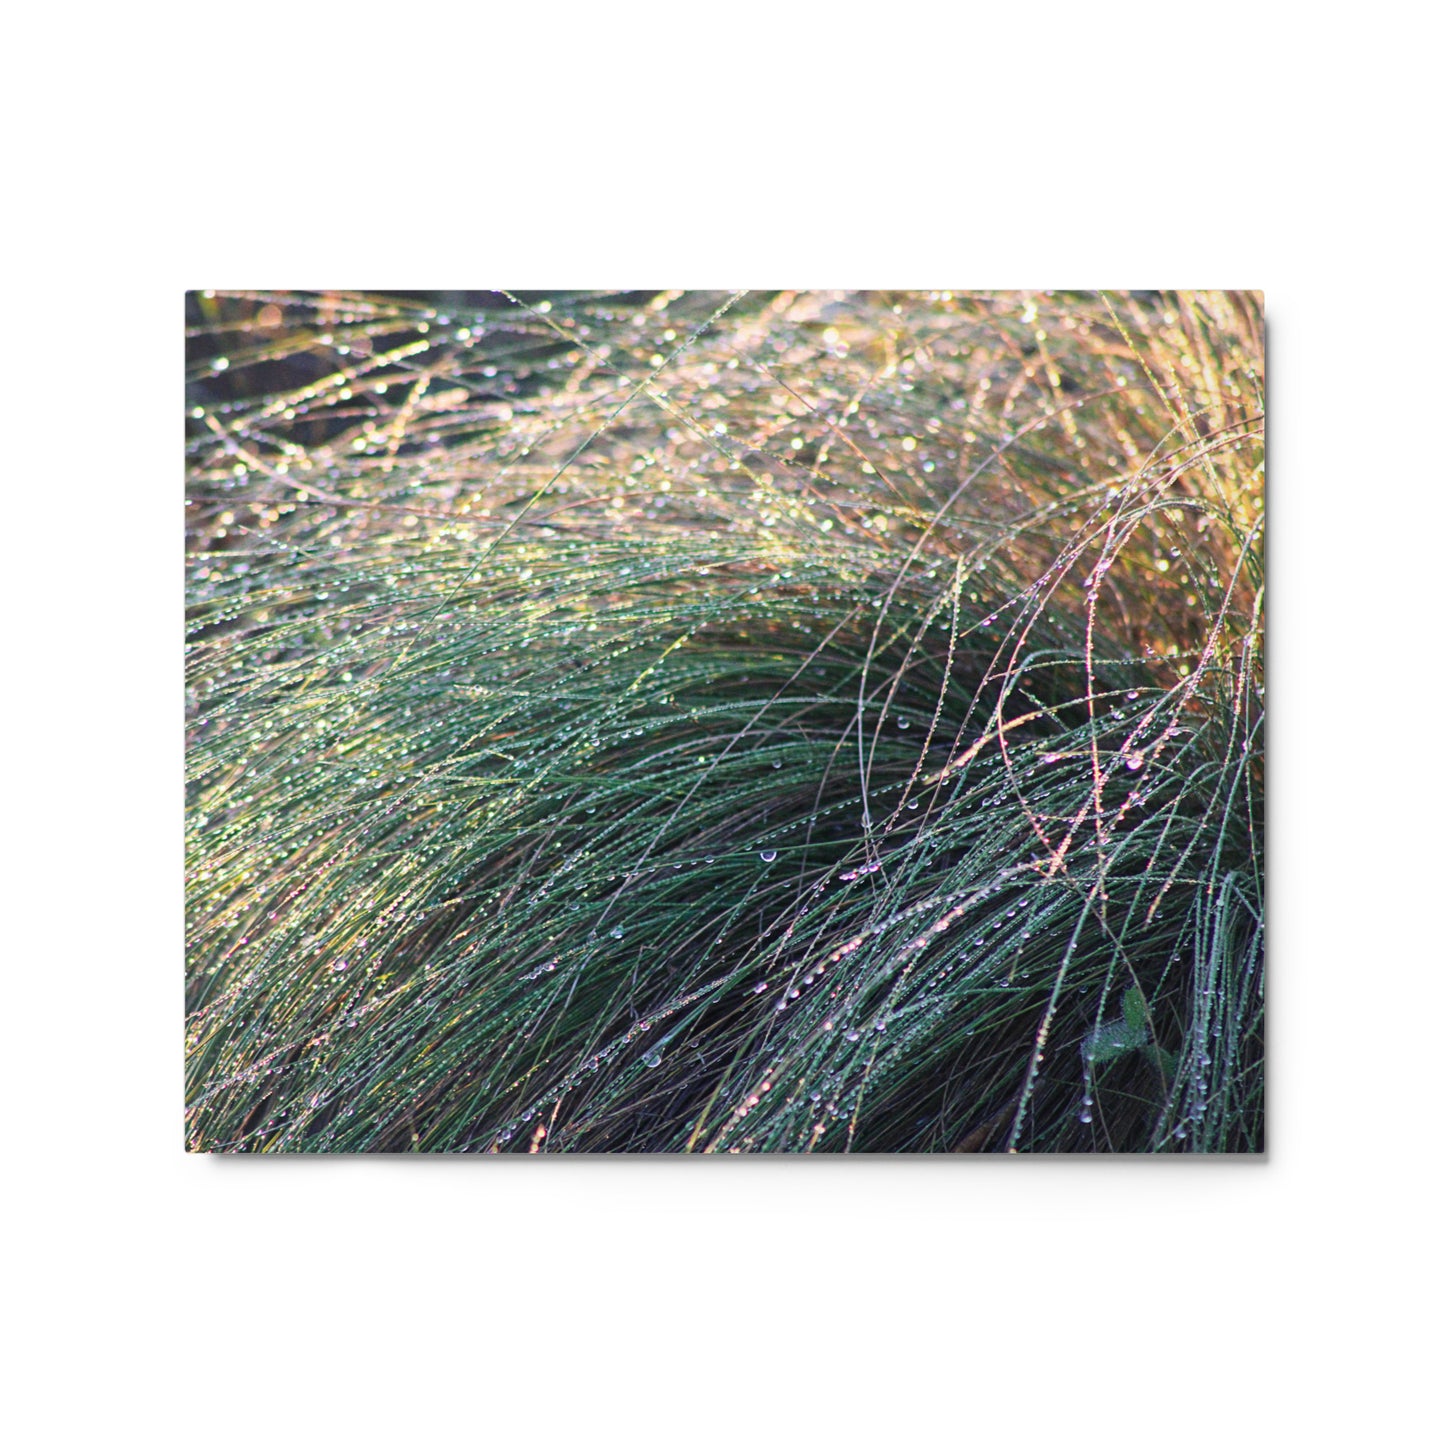 Grass 4 by C. Kovalick